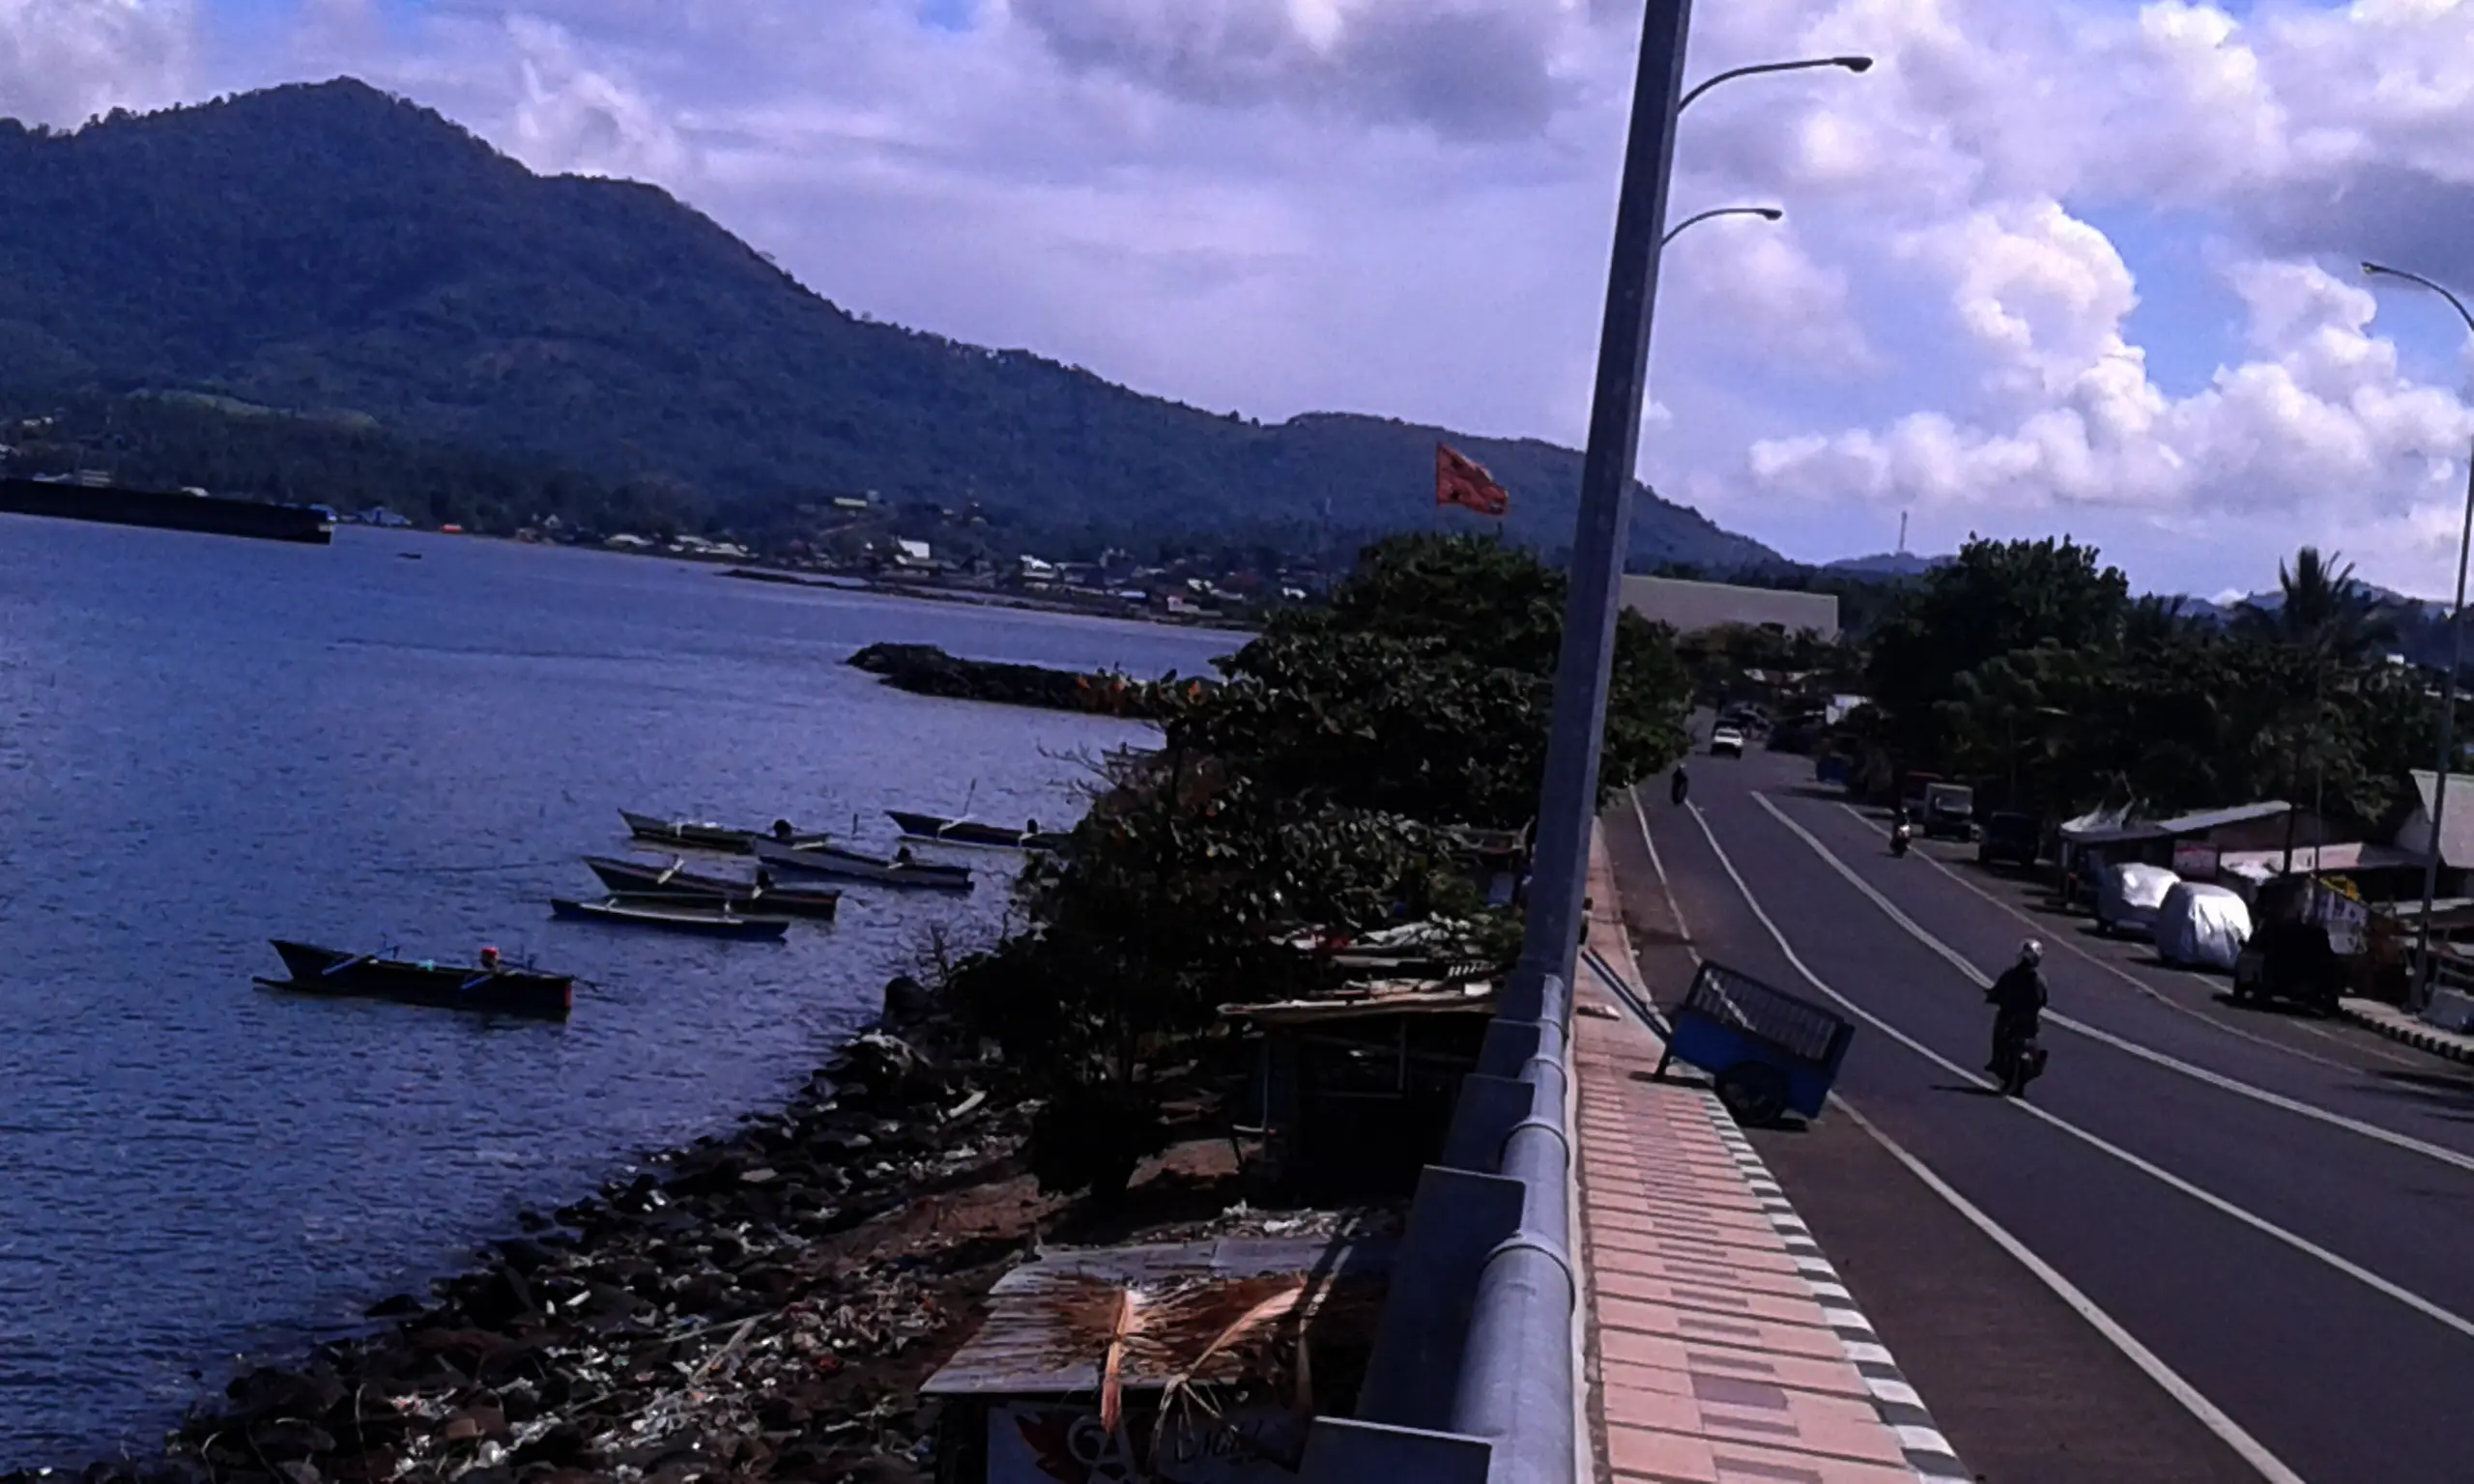  Proyek Reklamasi Boulevard 2 di Manado, Sulawesi Utara, bakal menggusur lokasi yang selama ini menjadi sumber penghasilan para nelayan. (Liputan6.com/Yoseph Ikanubun)